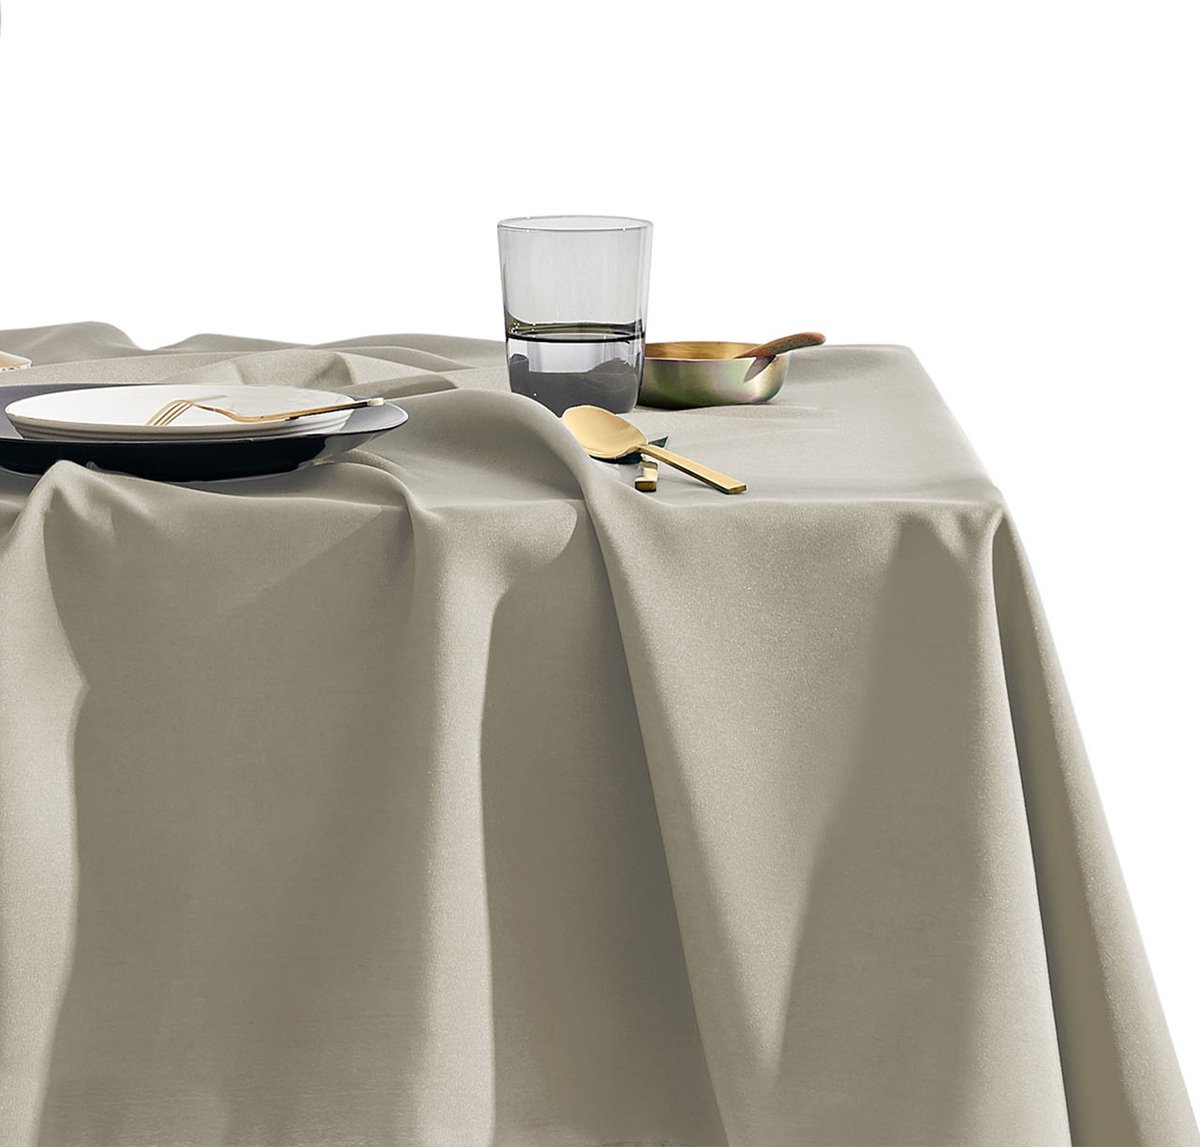 JEMIDI Aura stoffen tafelkleed rechthoekig - 110 x 160 cm - Decoratief tafellaken in effen design - Taupe